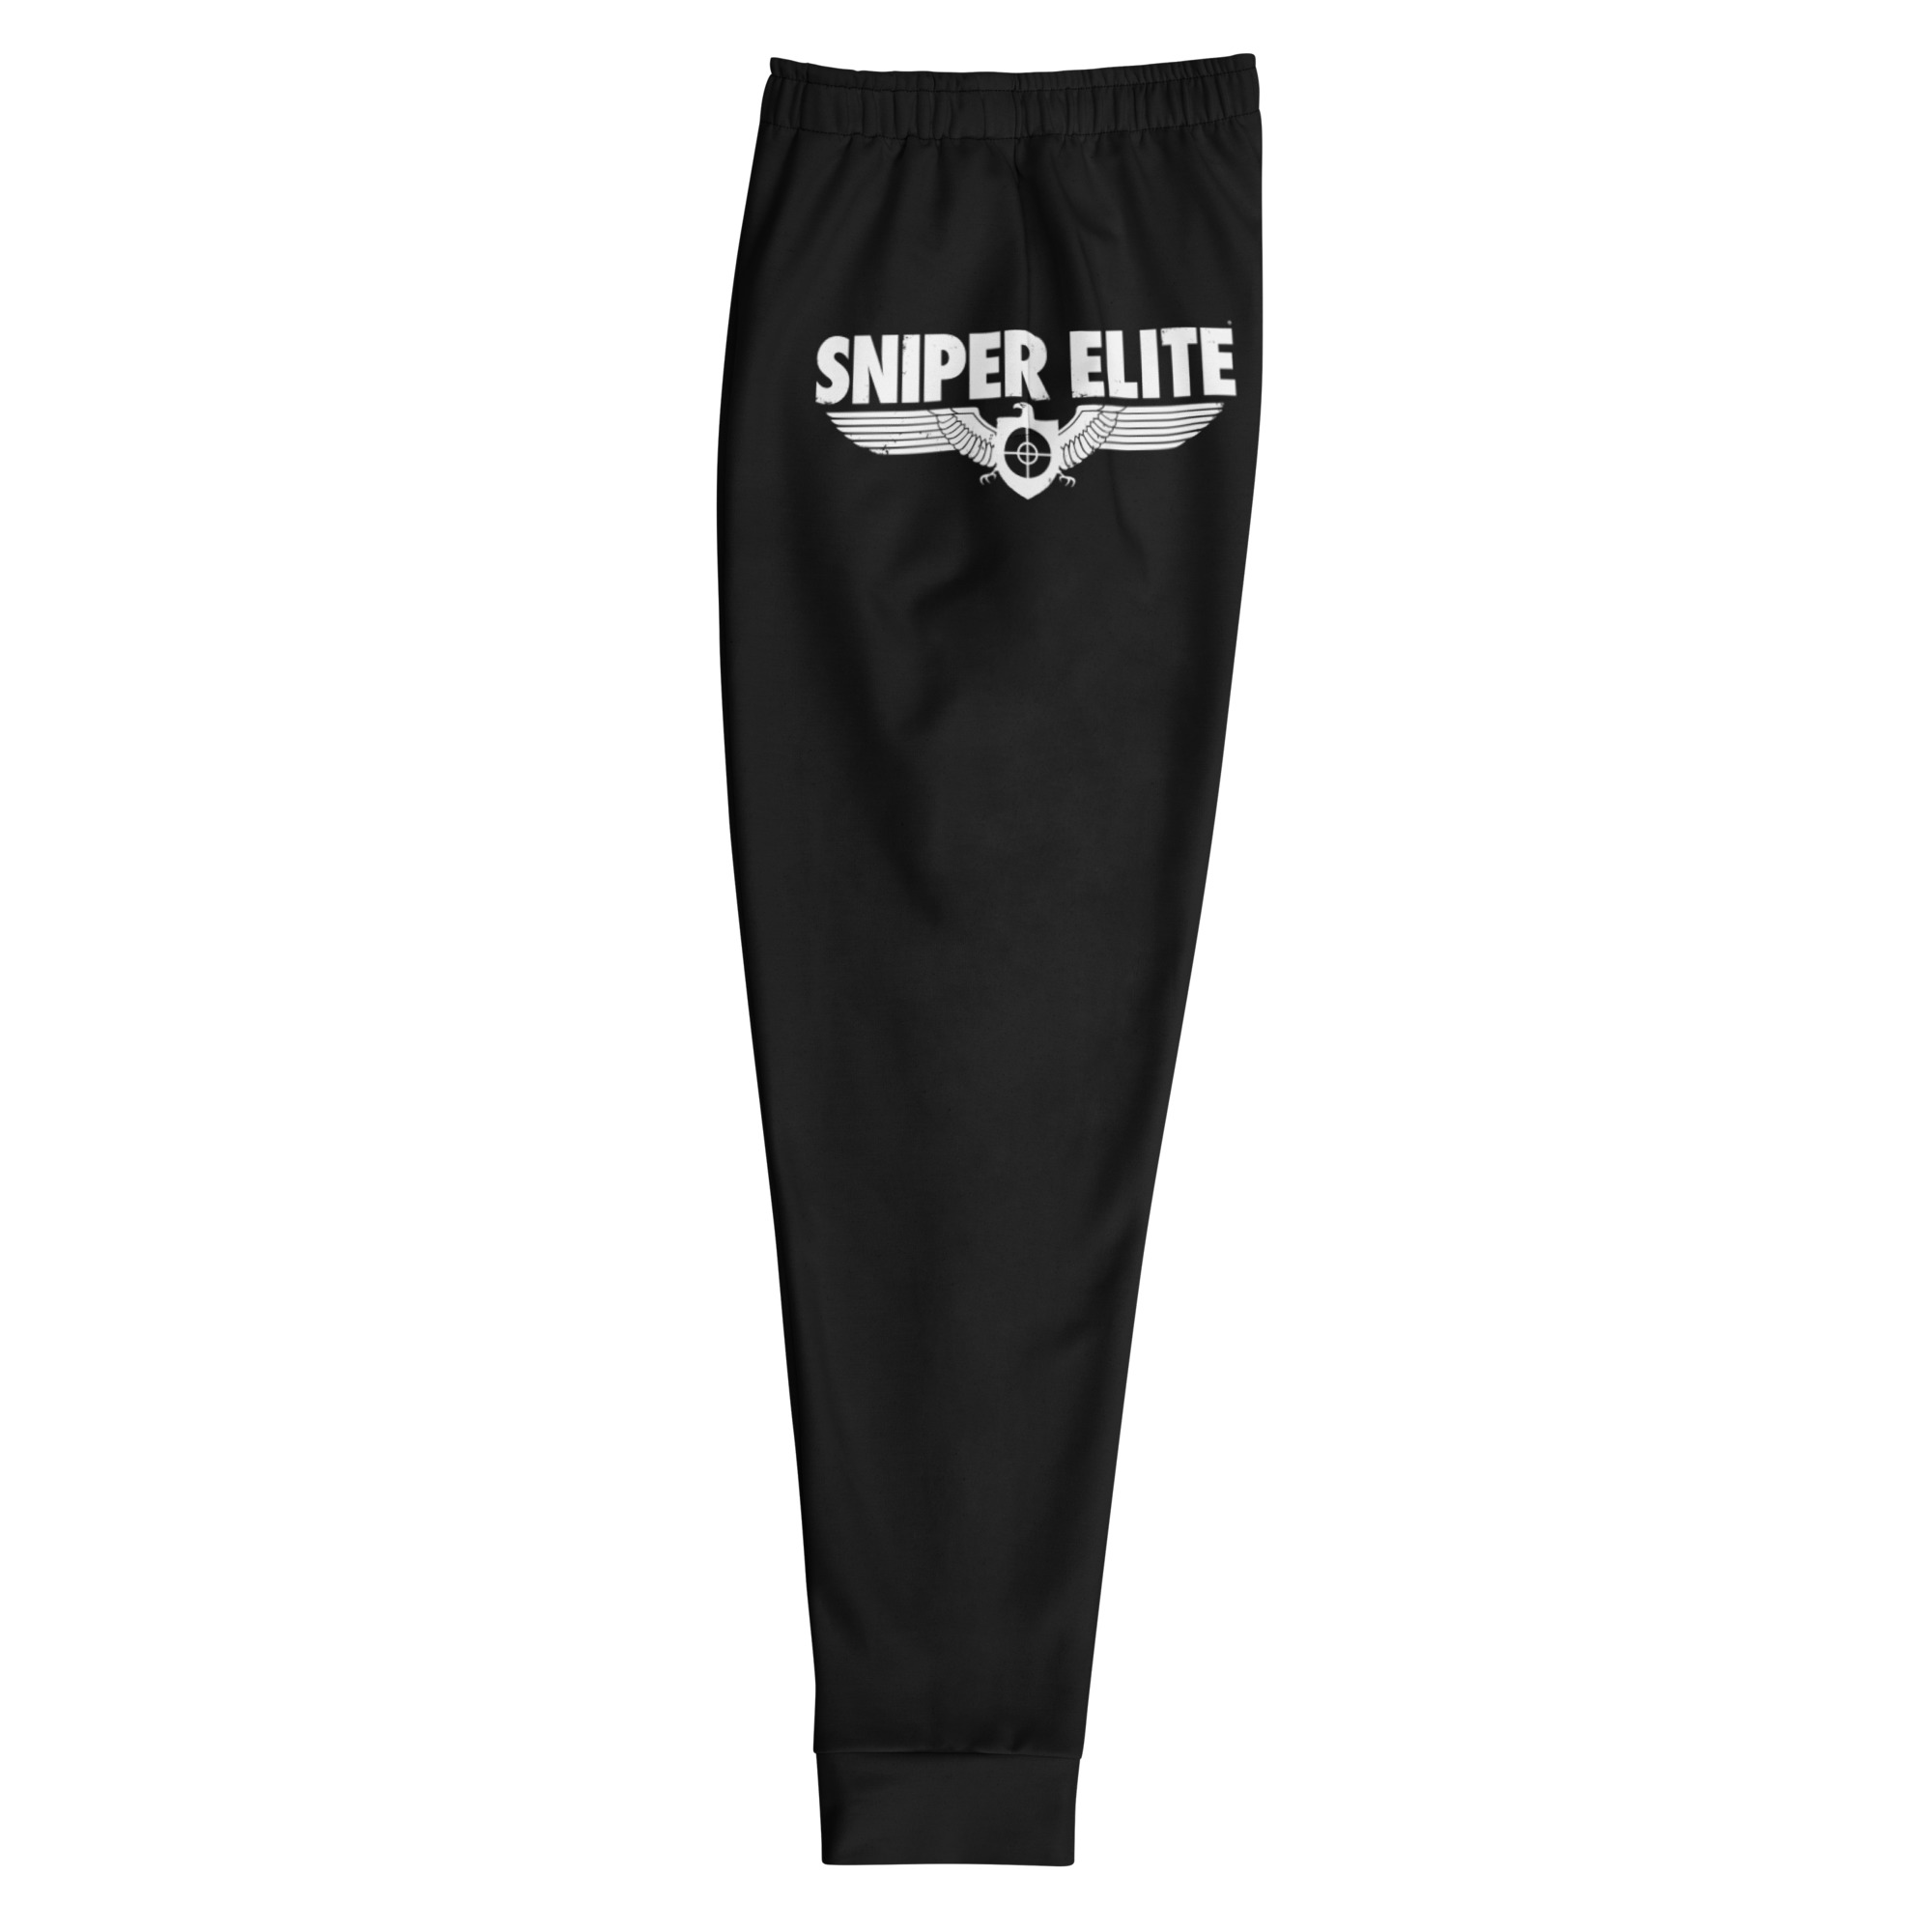 Black jogging bottoms with the Sniper Elite logo in white caps